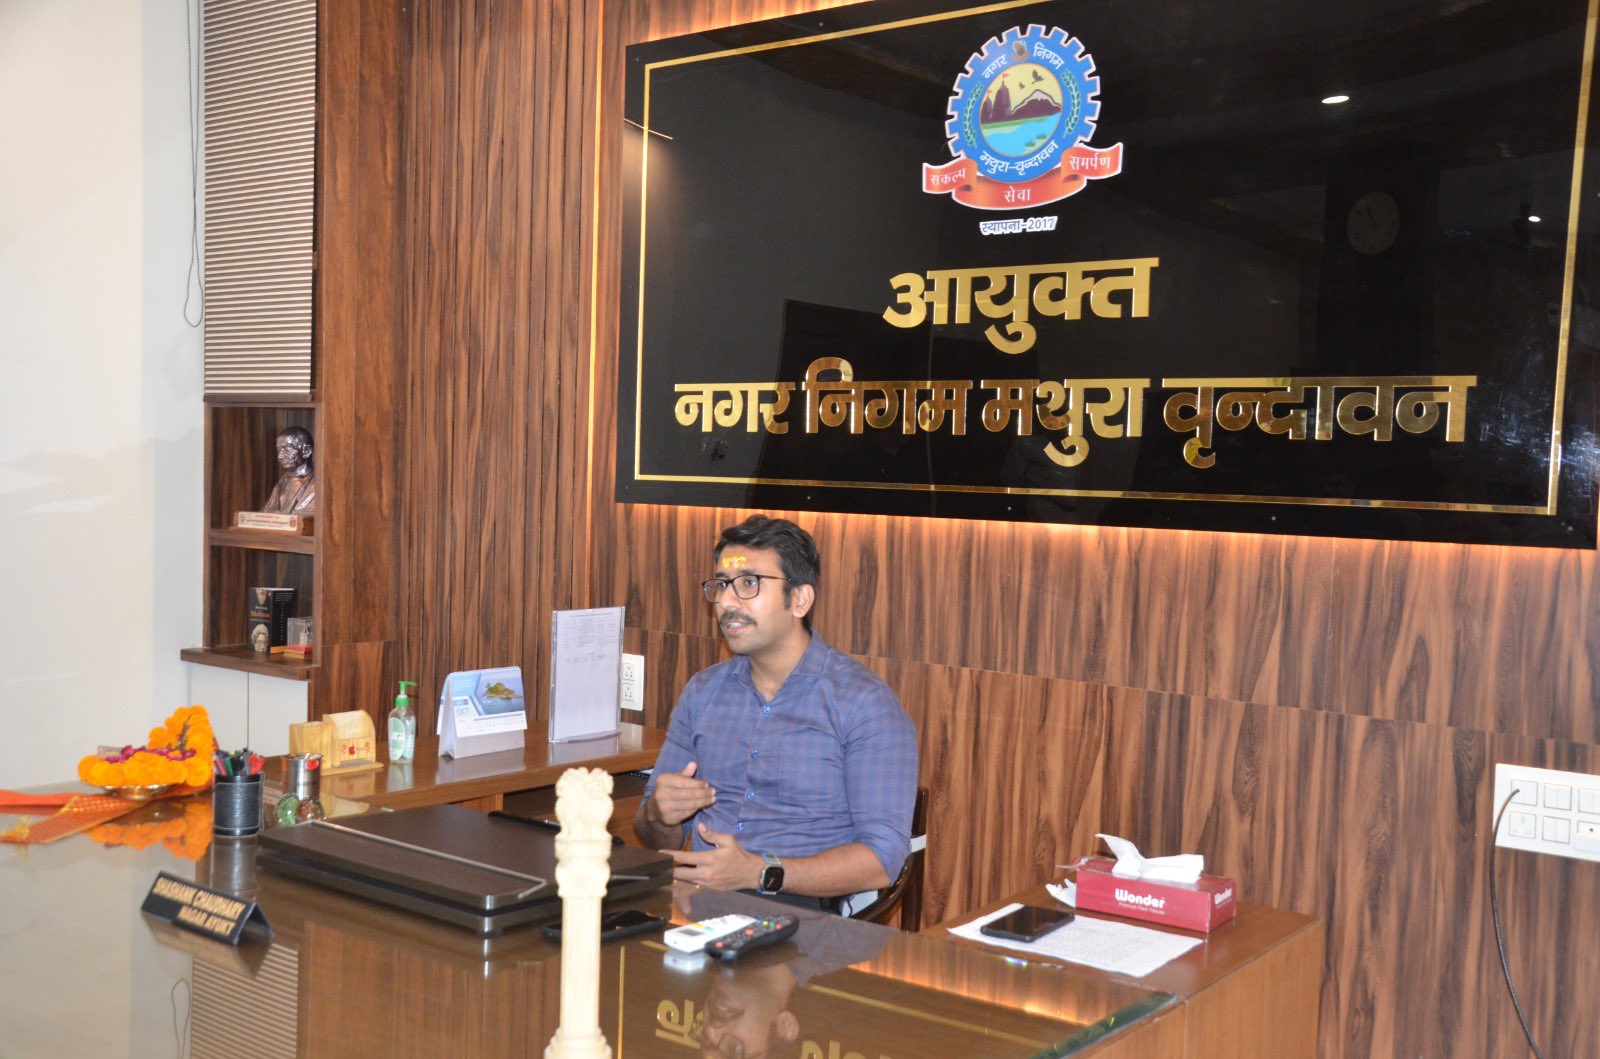 Shashank Chaudhary joins as New Municipal Commissioner of Mathura – Vrindavan